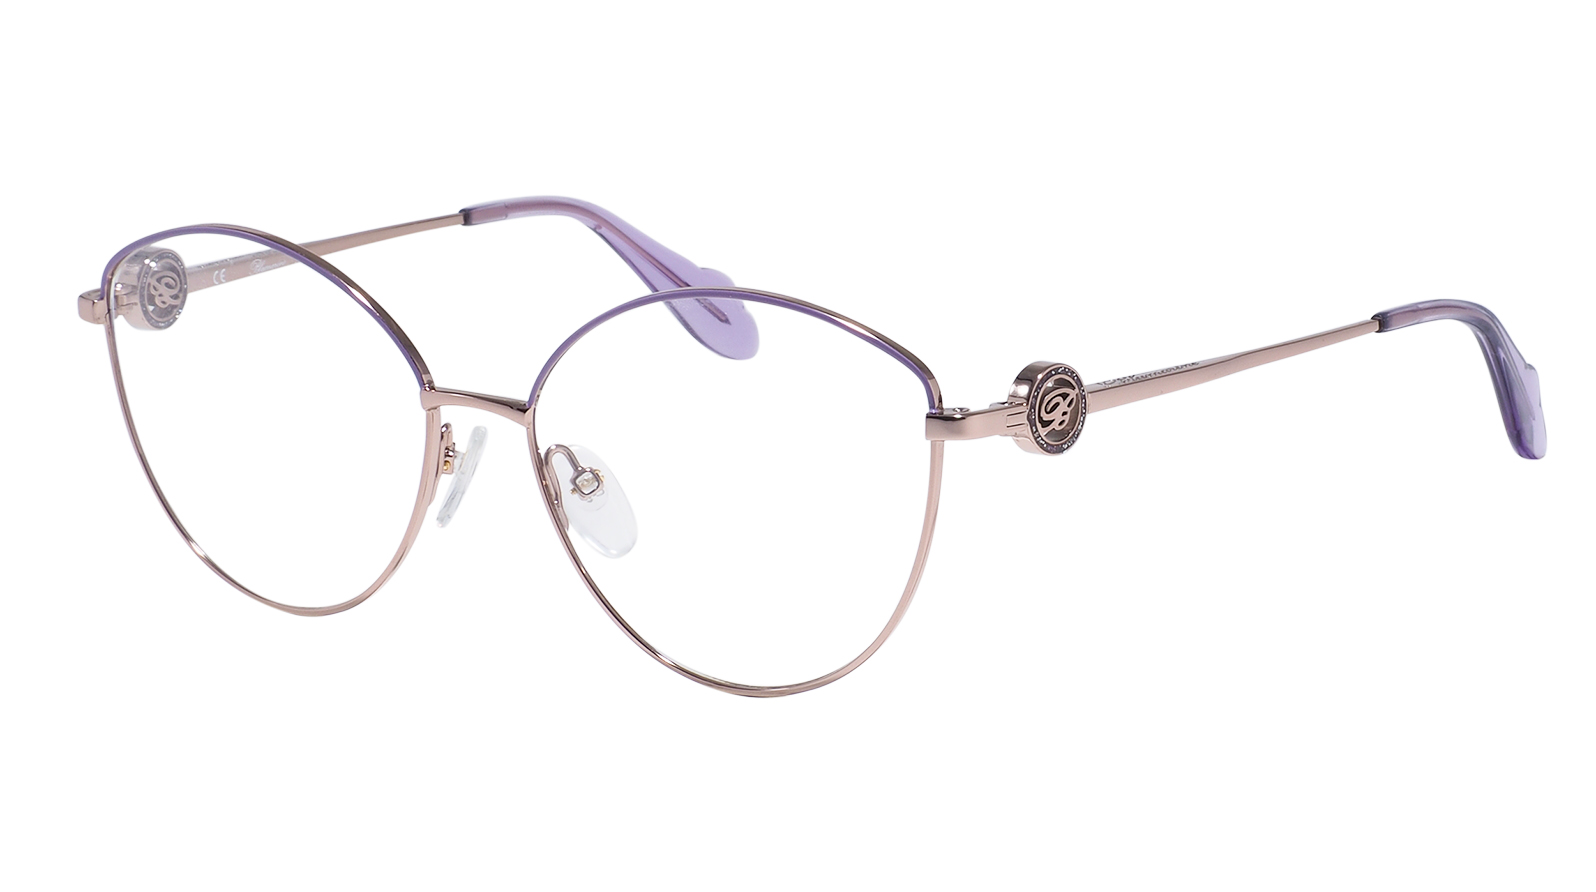 Blumarine 167 E59 очки корригирующие 3гр линза фхс мужские